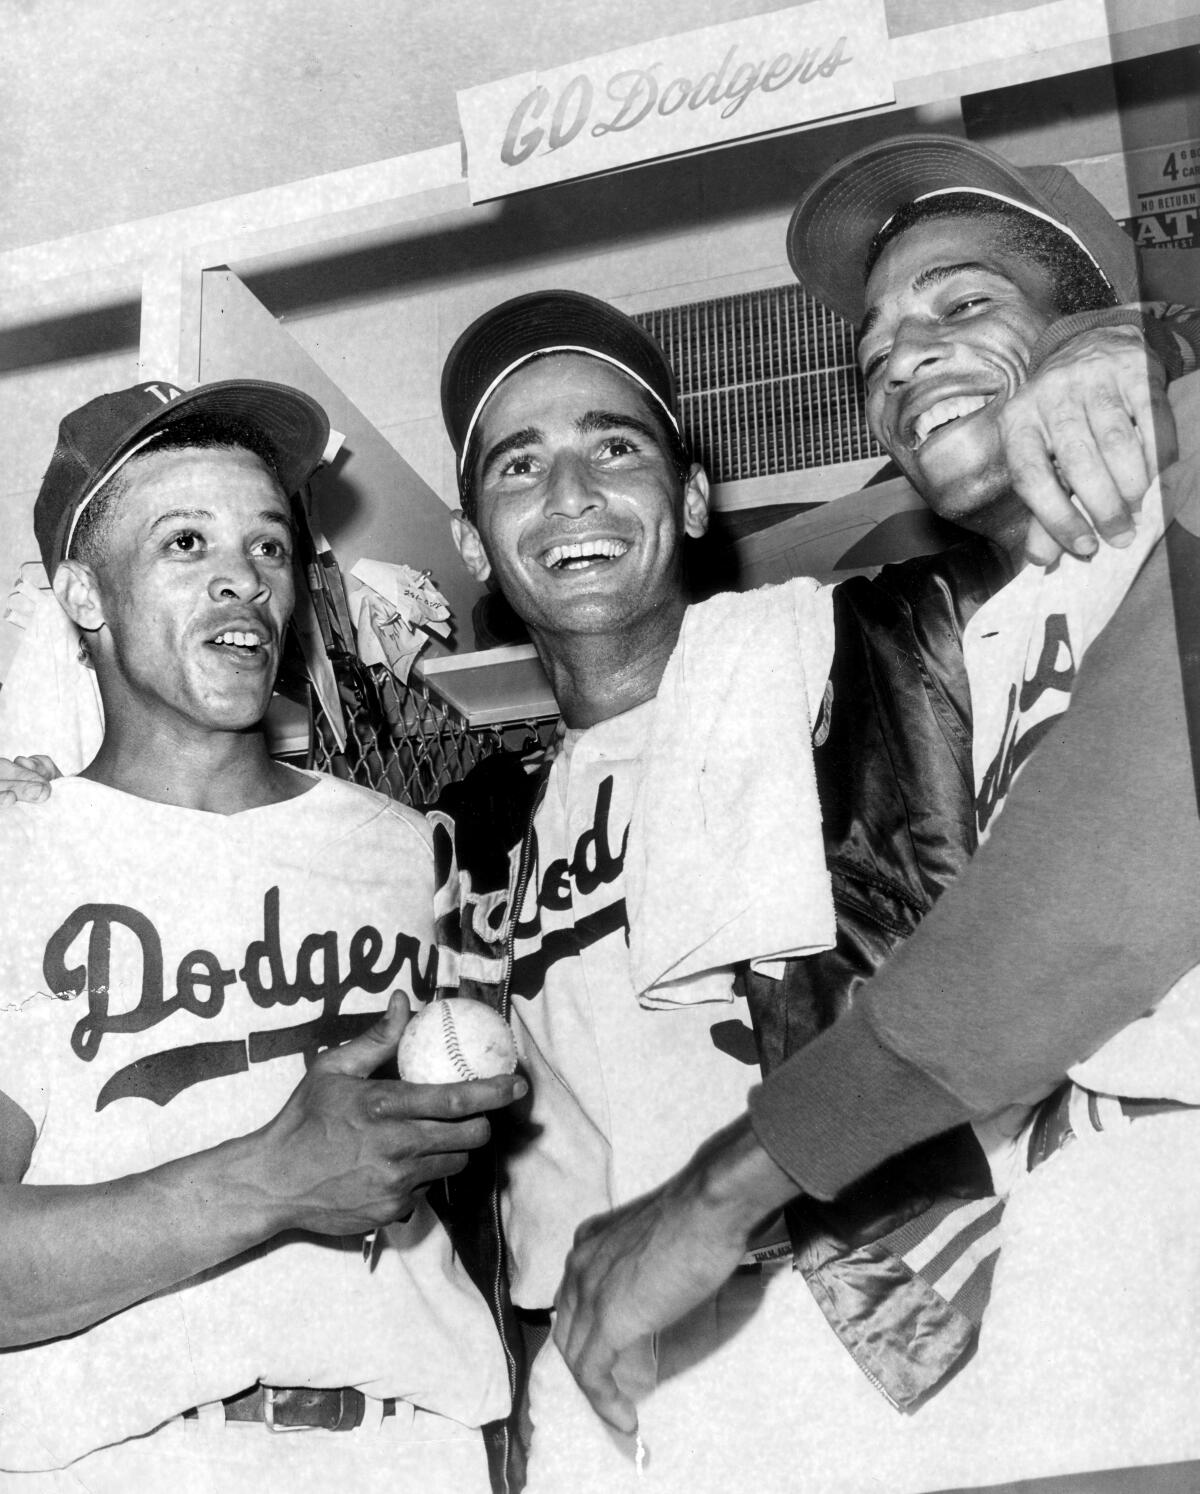 Dodgers history: Looking back at the 1963 World Series winners - True Blue  LA